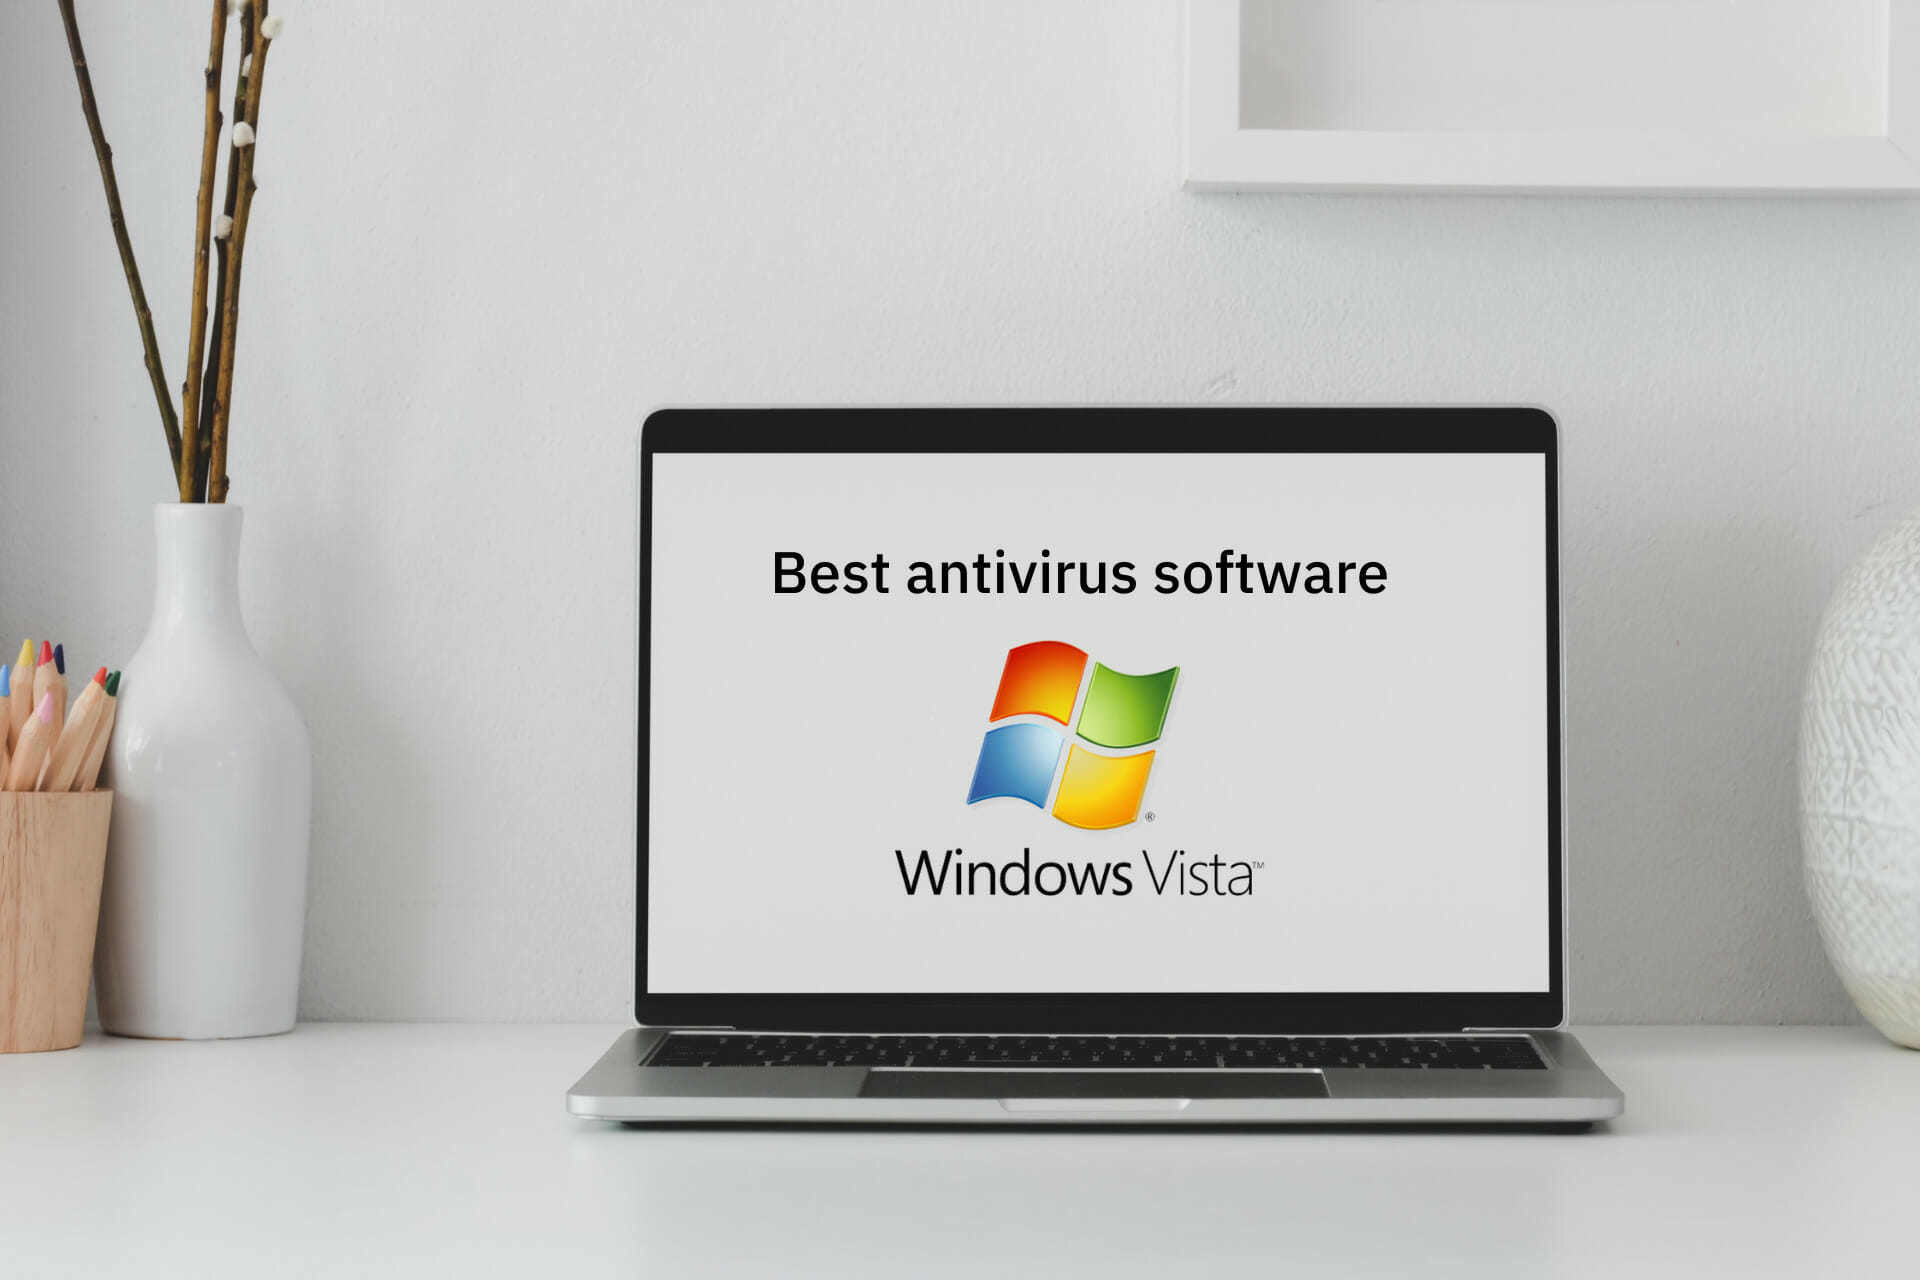 Best antivirus software for Windows Vista